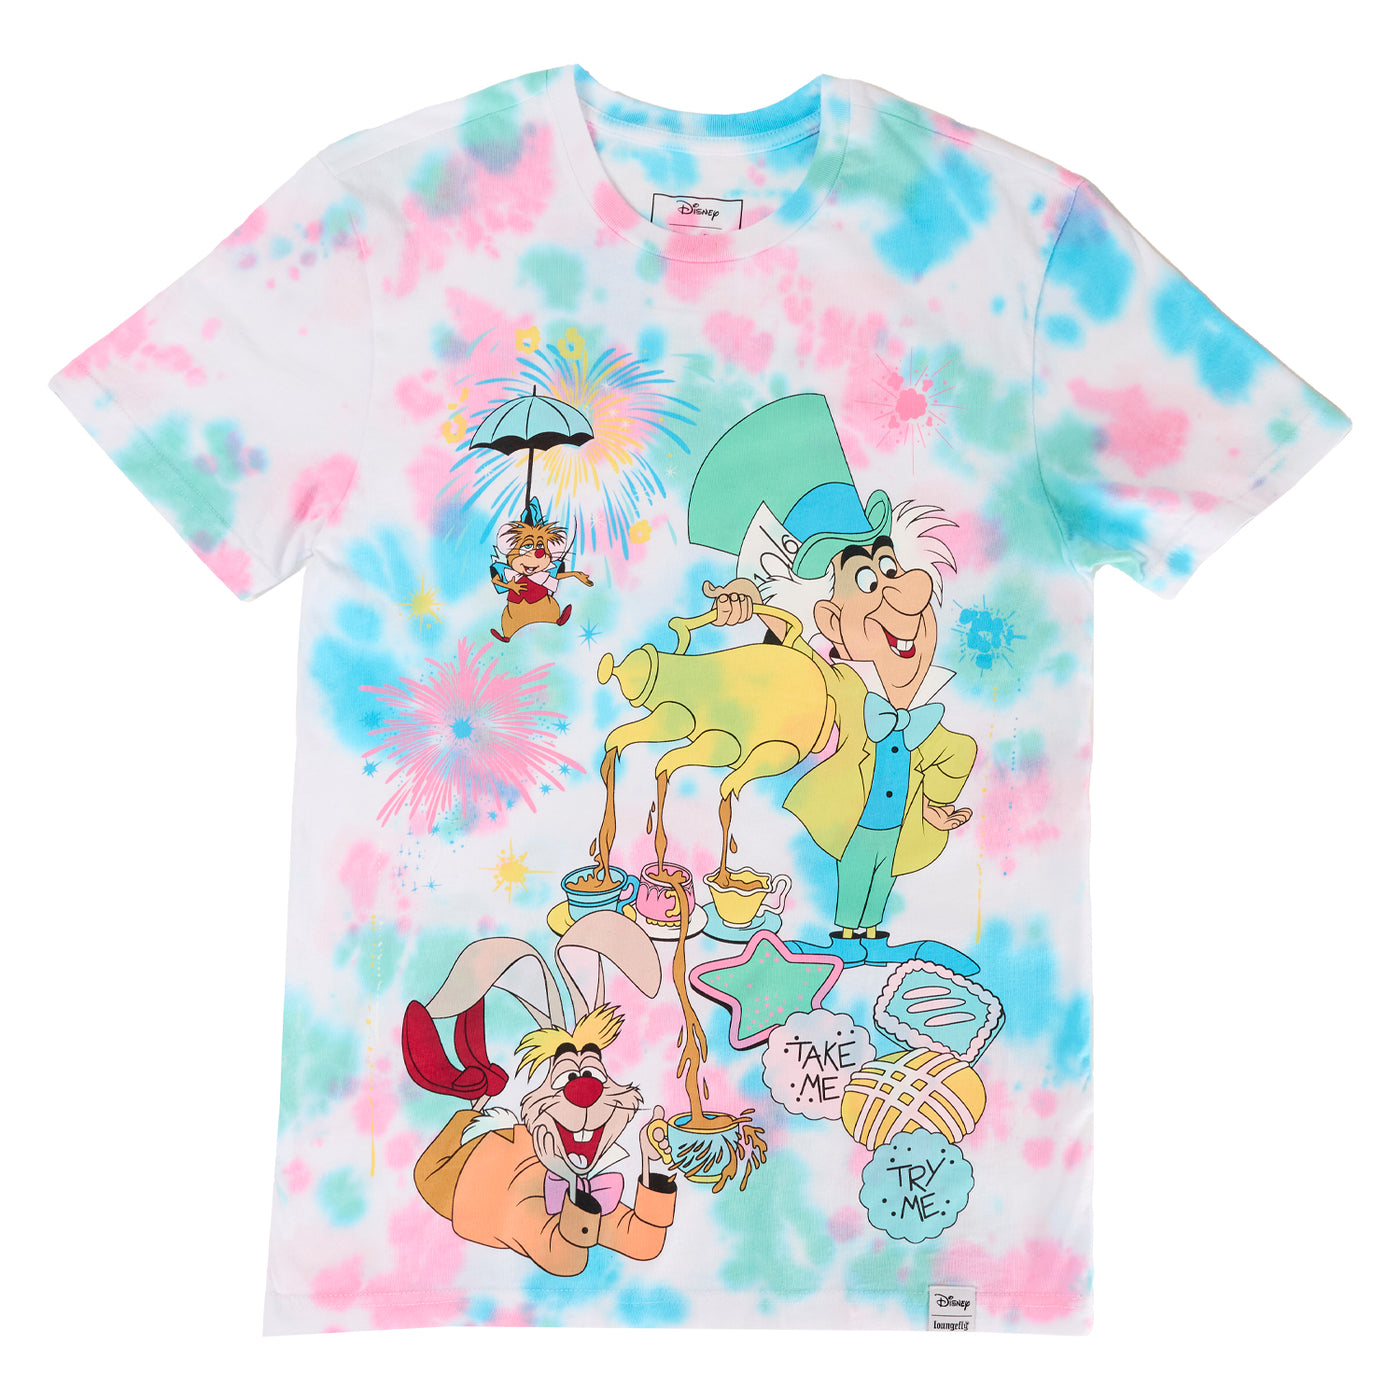 Loungefly Disney Alice in Wonderland Unbirthday T-Shirt